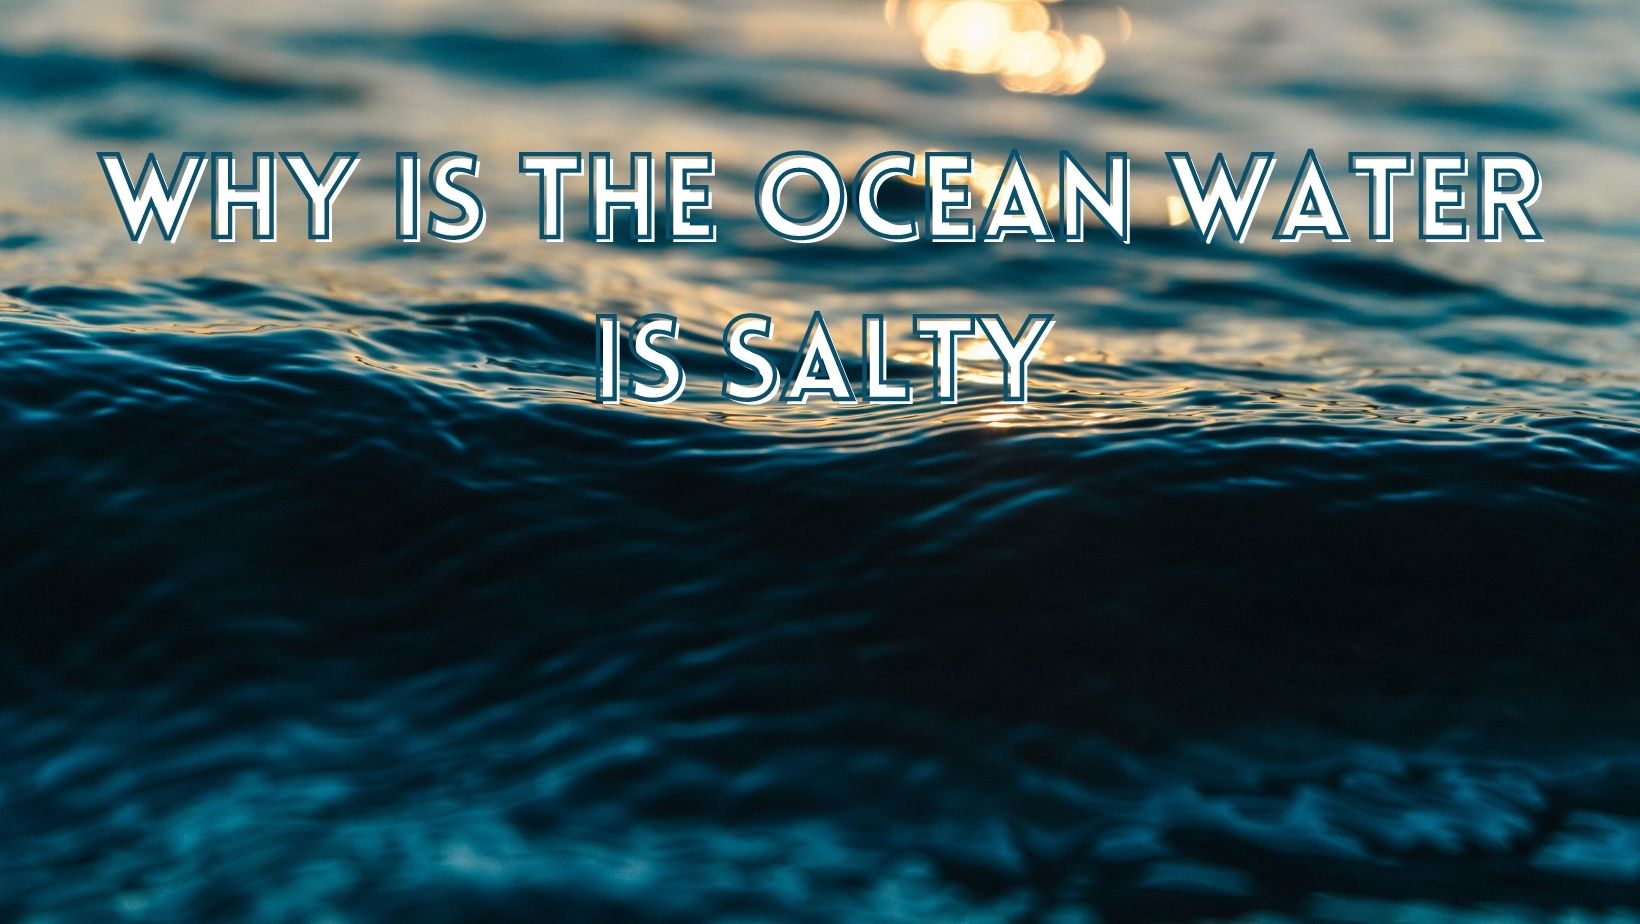 Why is the ocean water is salty